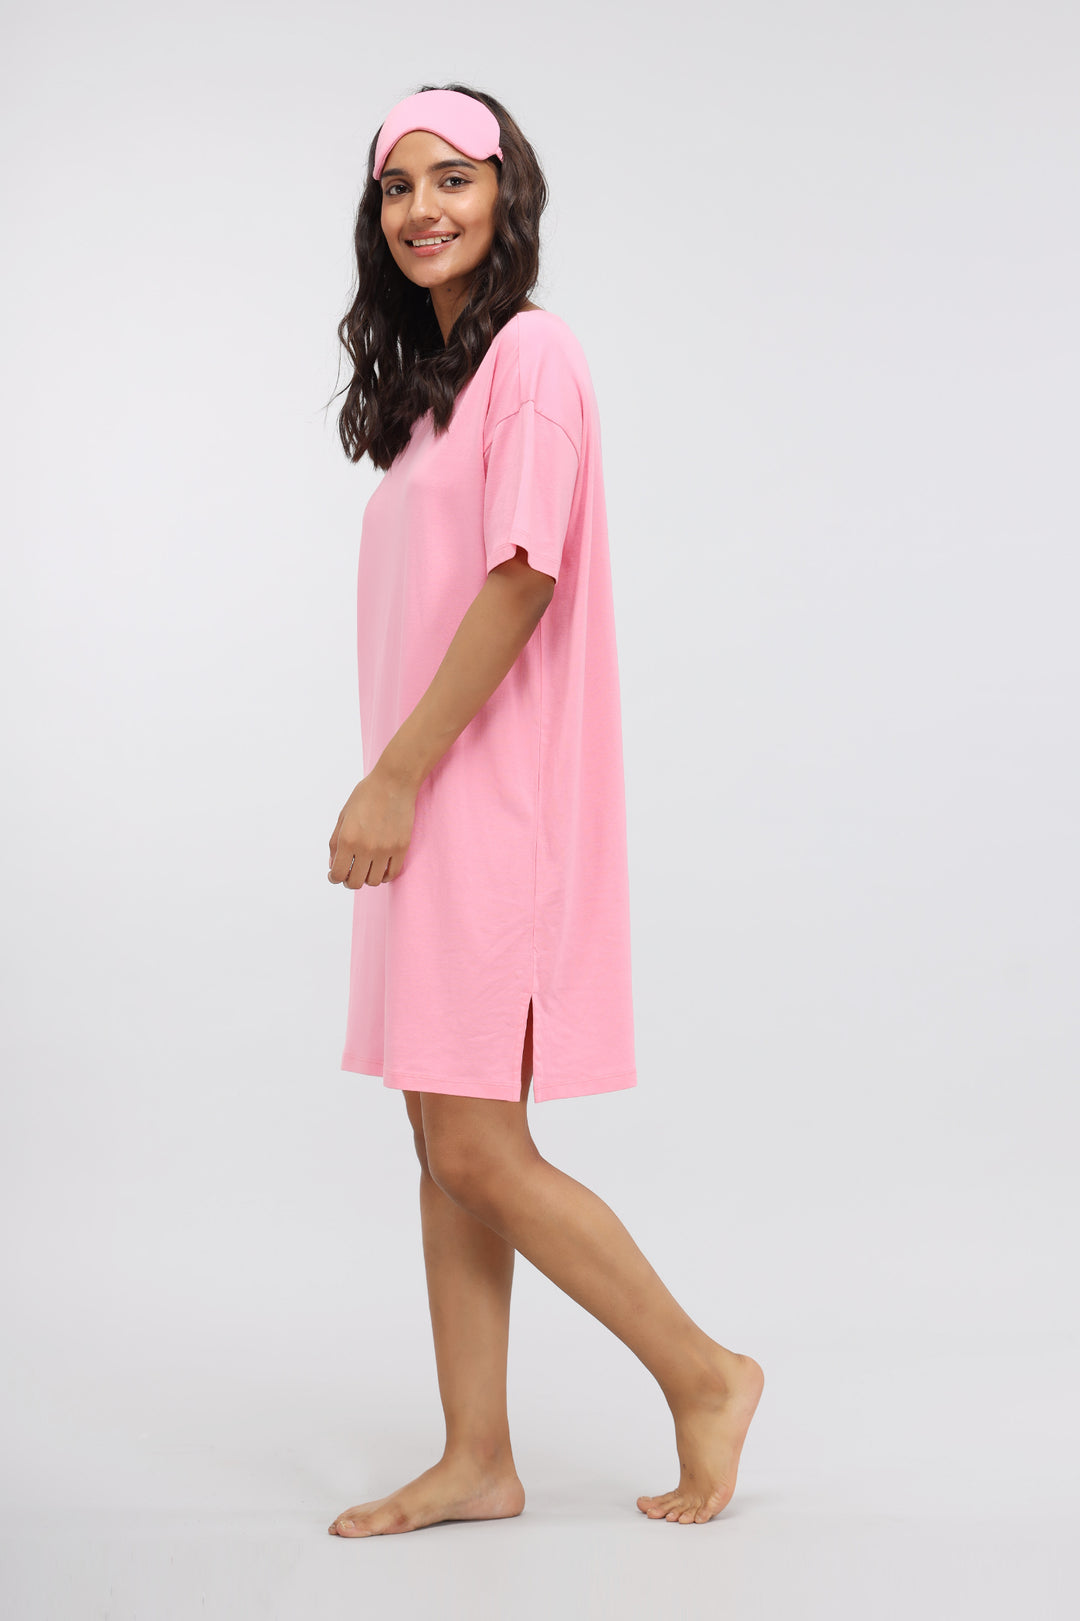 Sachet Pink Supima® T-Shirt Dress